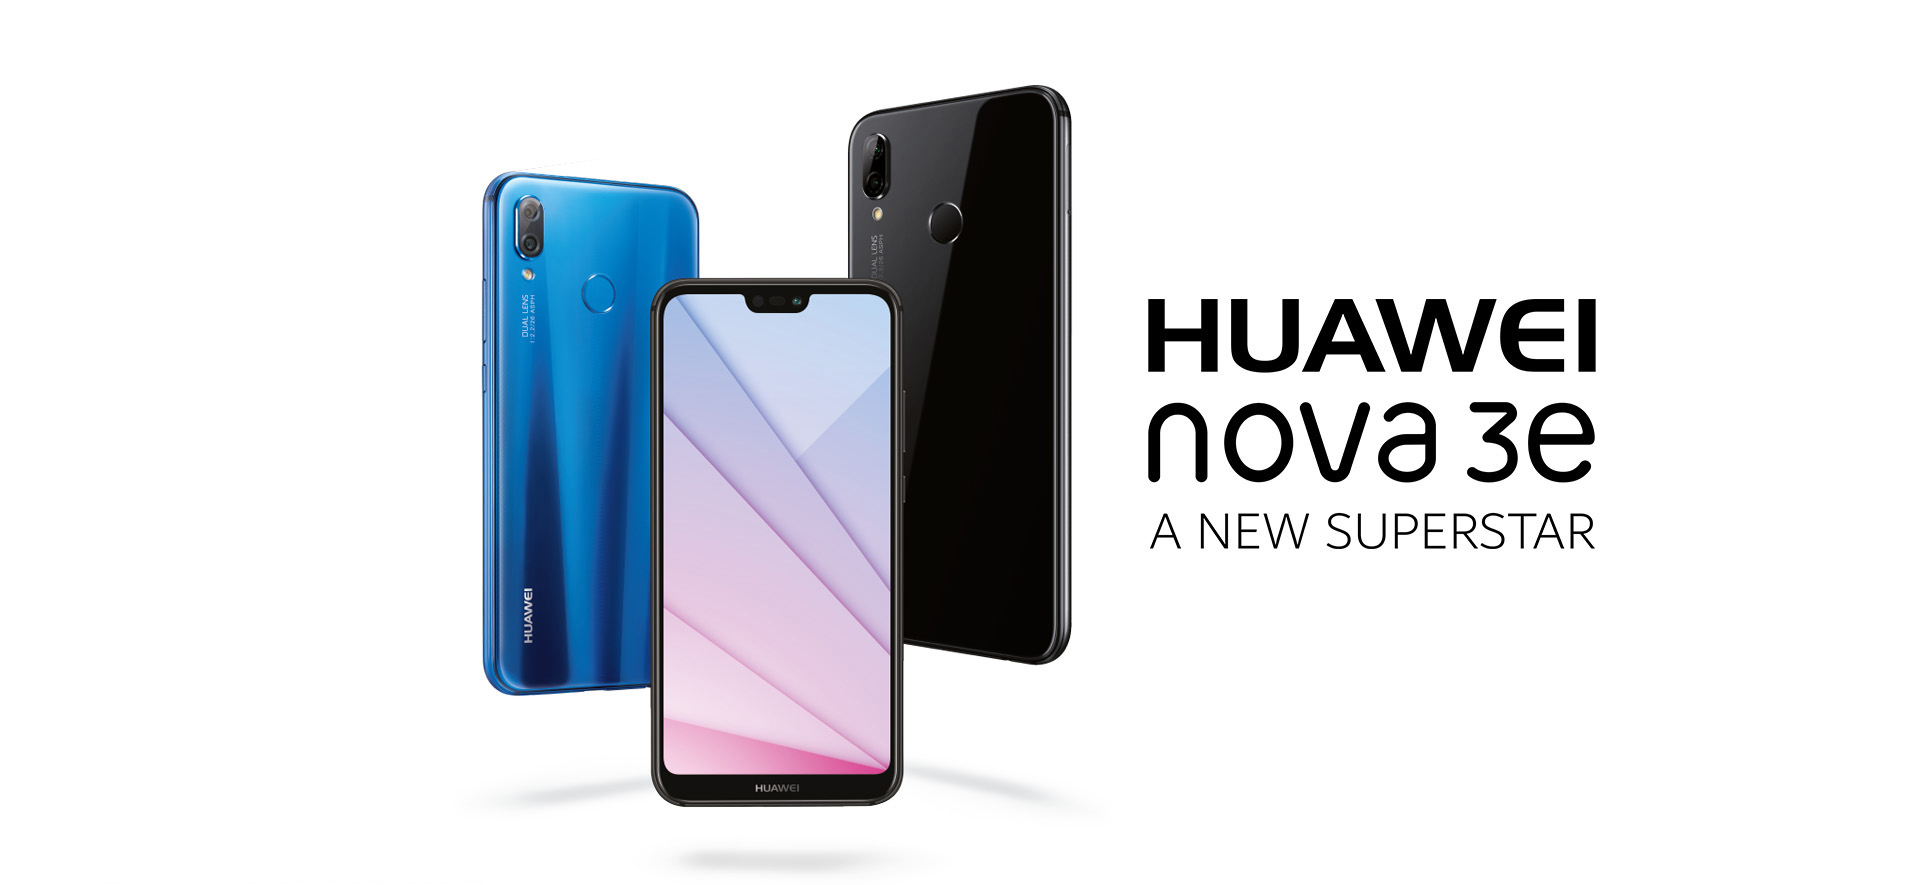 Huawei nova 3e - indul a notch-korszak